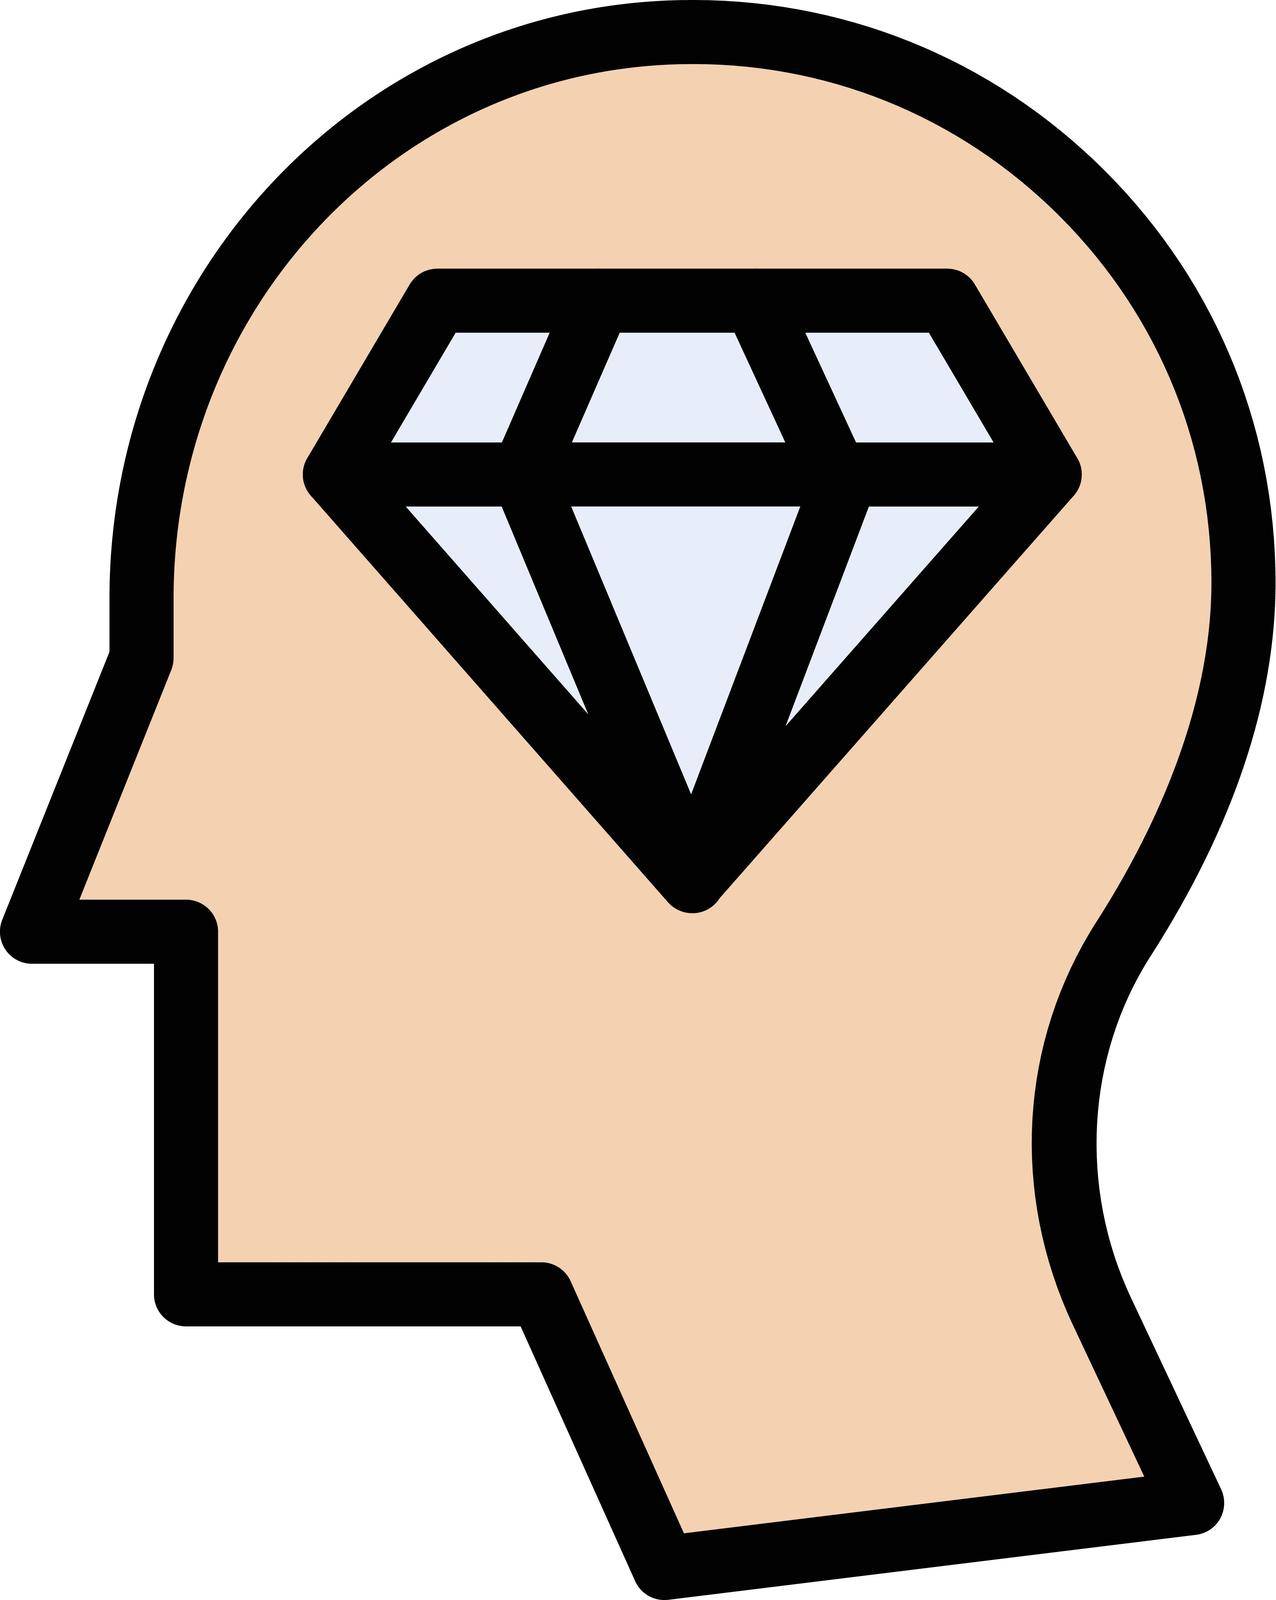 mind diamond by vectorstall